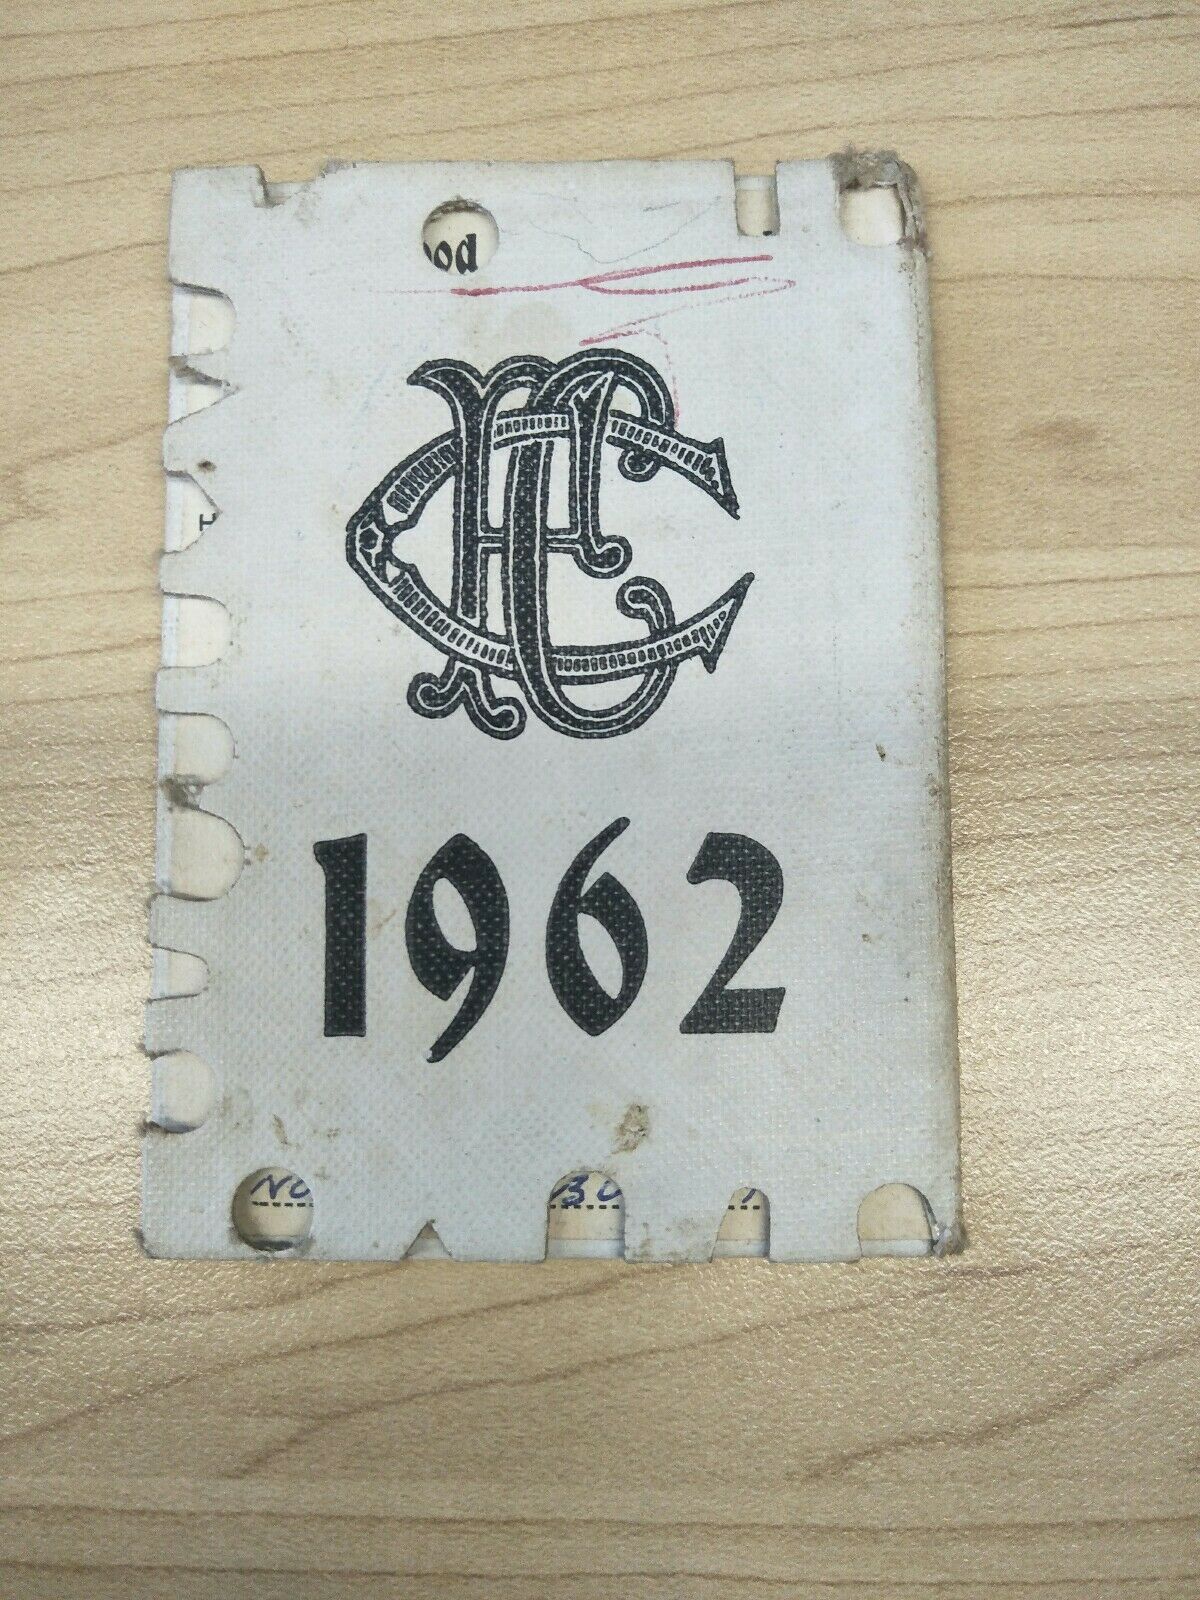 VFL 1962 Collingwood Football Club Season Ticket No. 6628